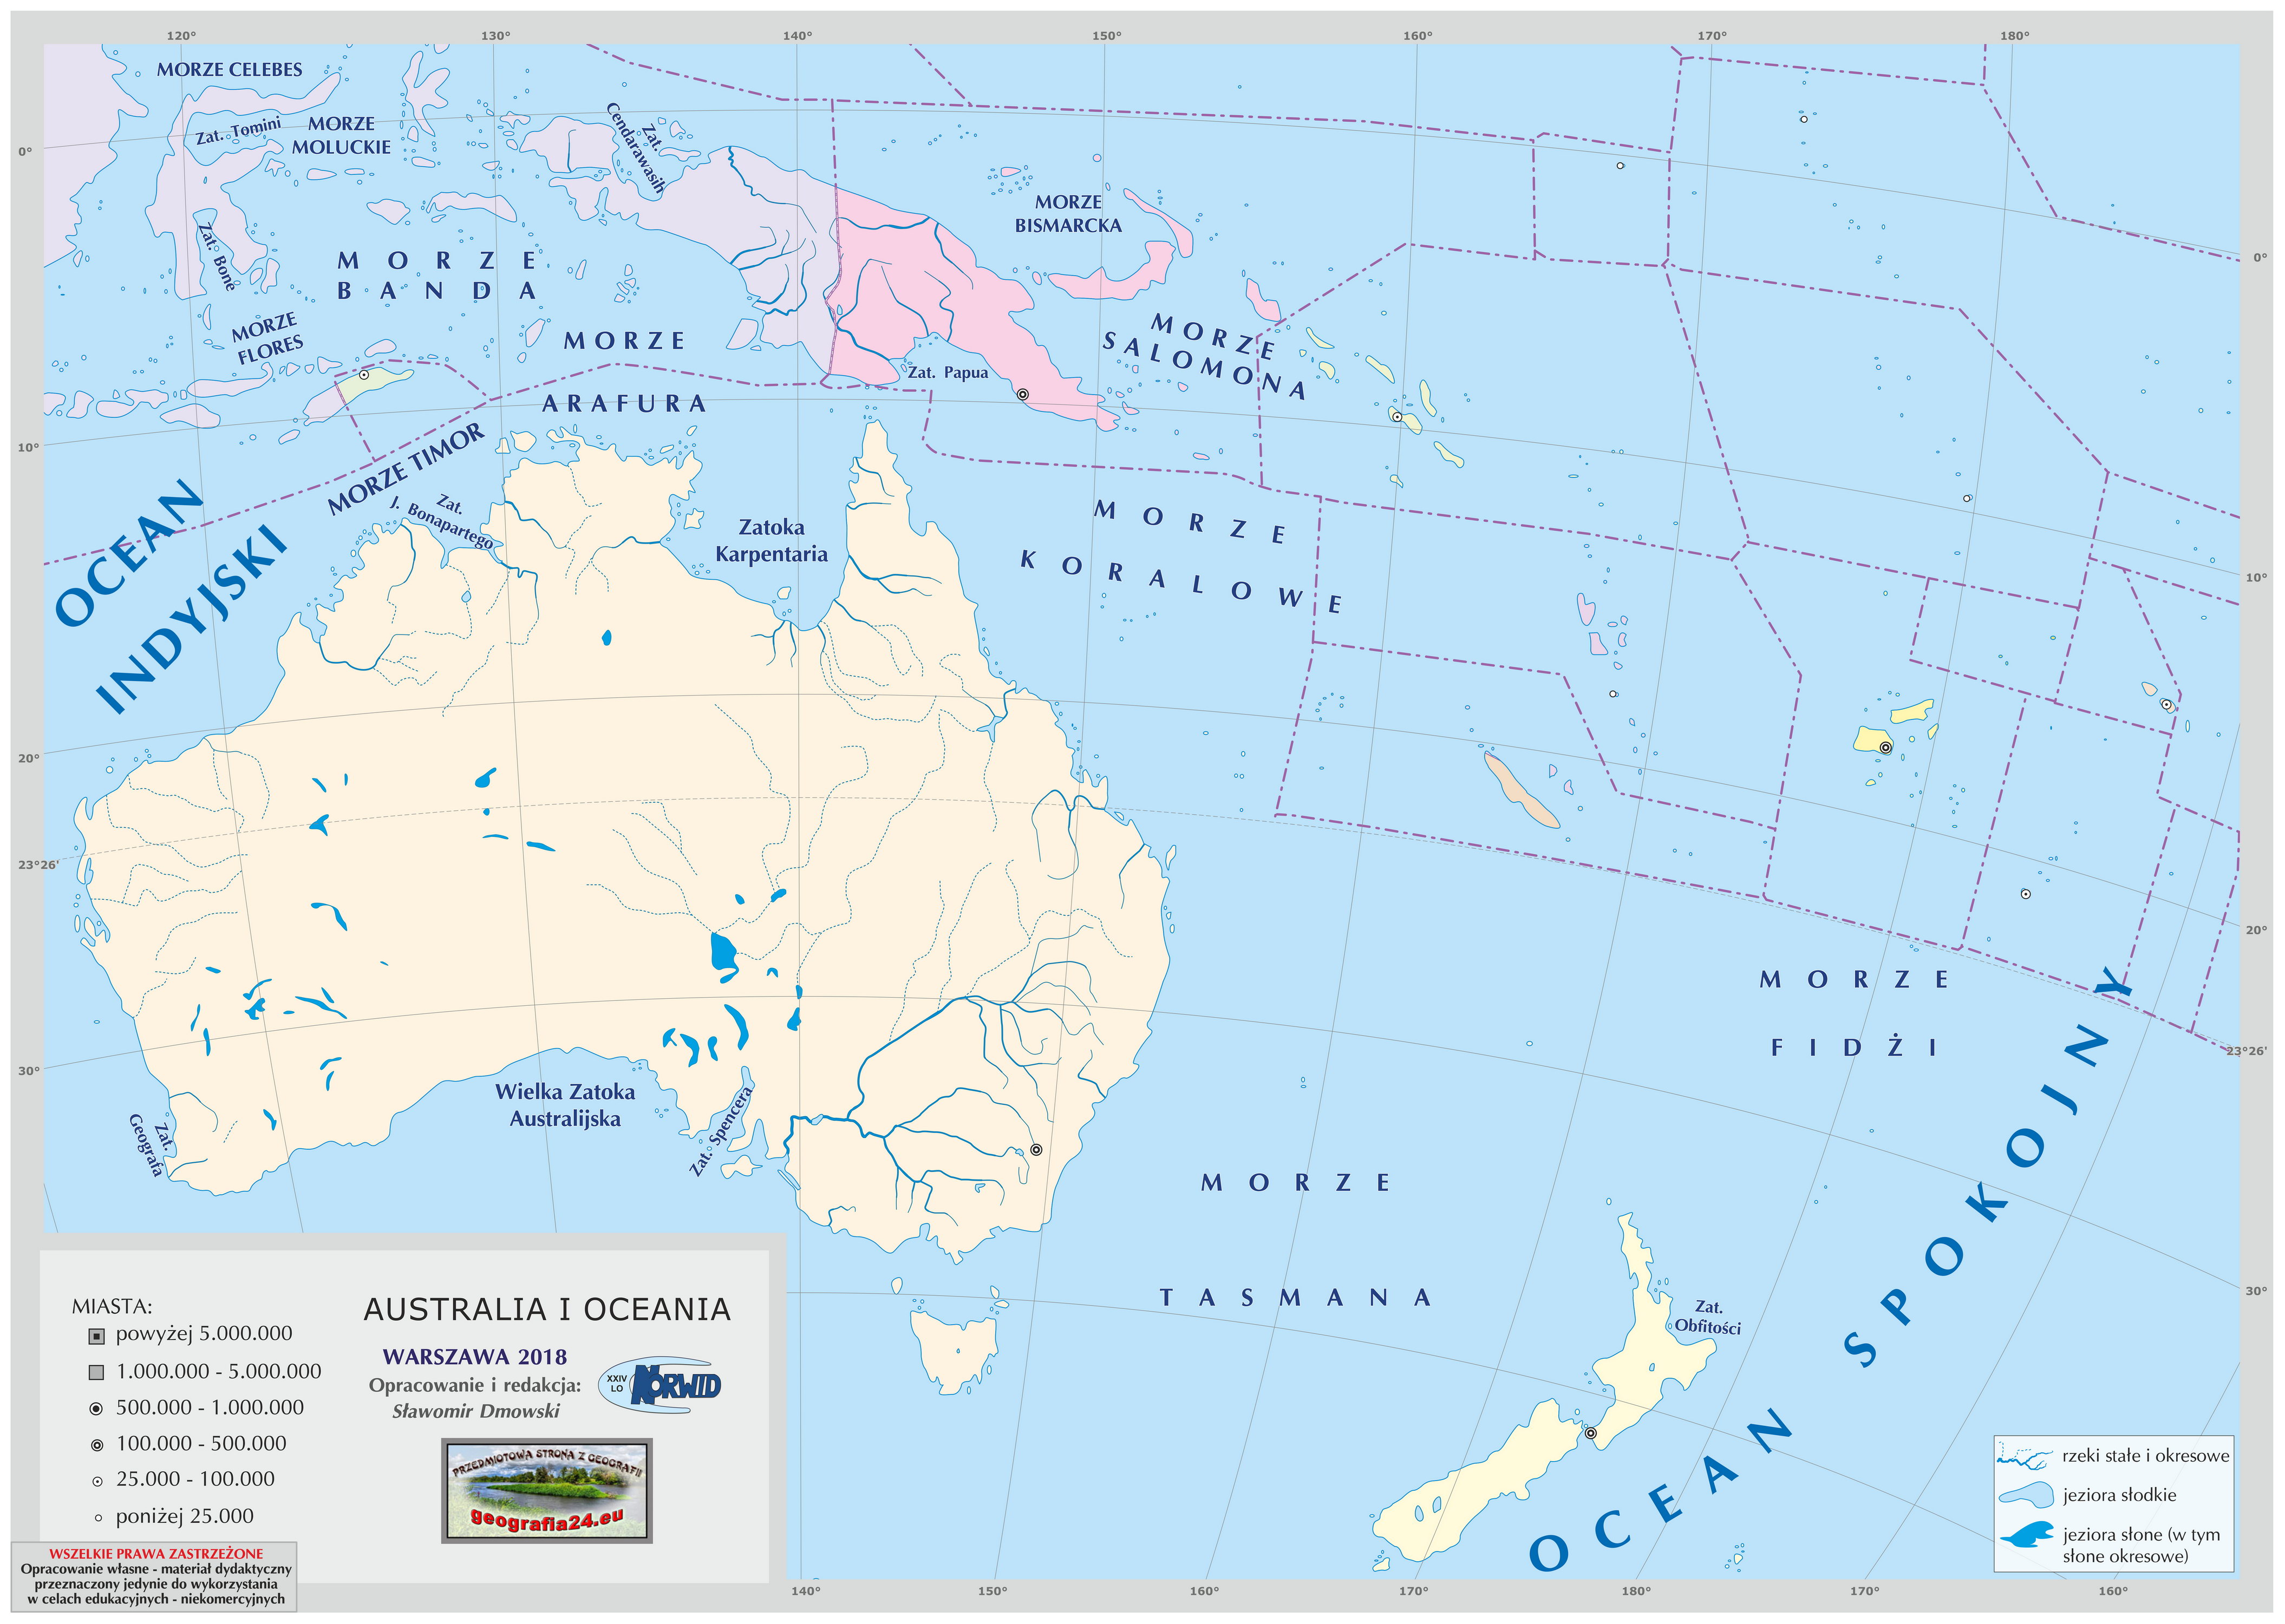 Australia I Oceania Mapa Polityczna Margaret Wiegel Images And Photos